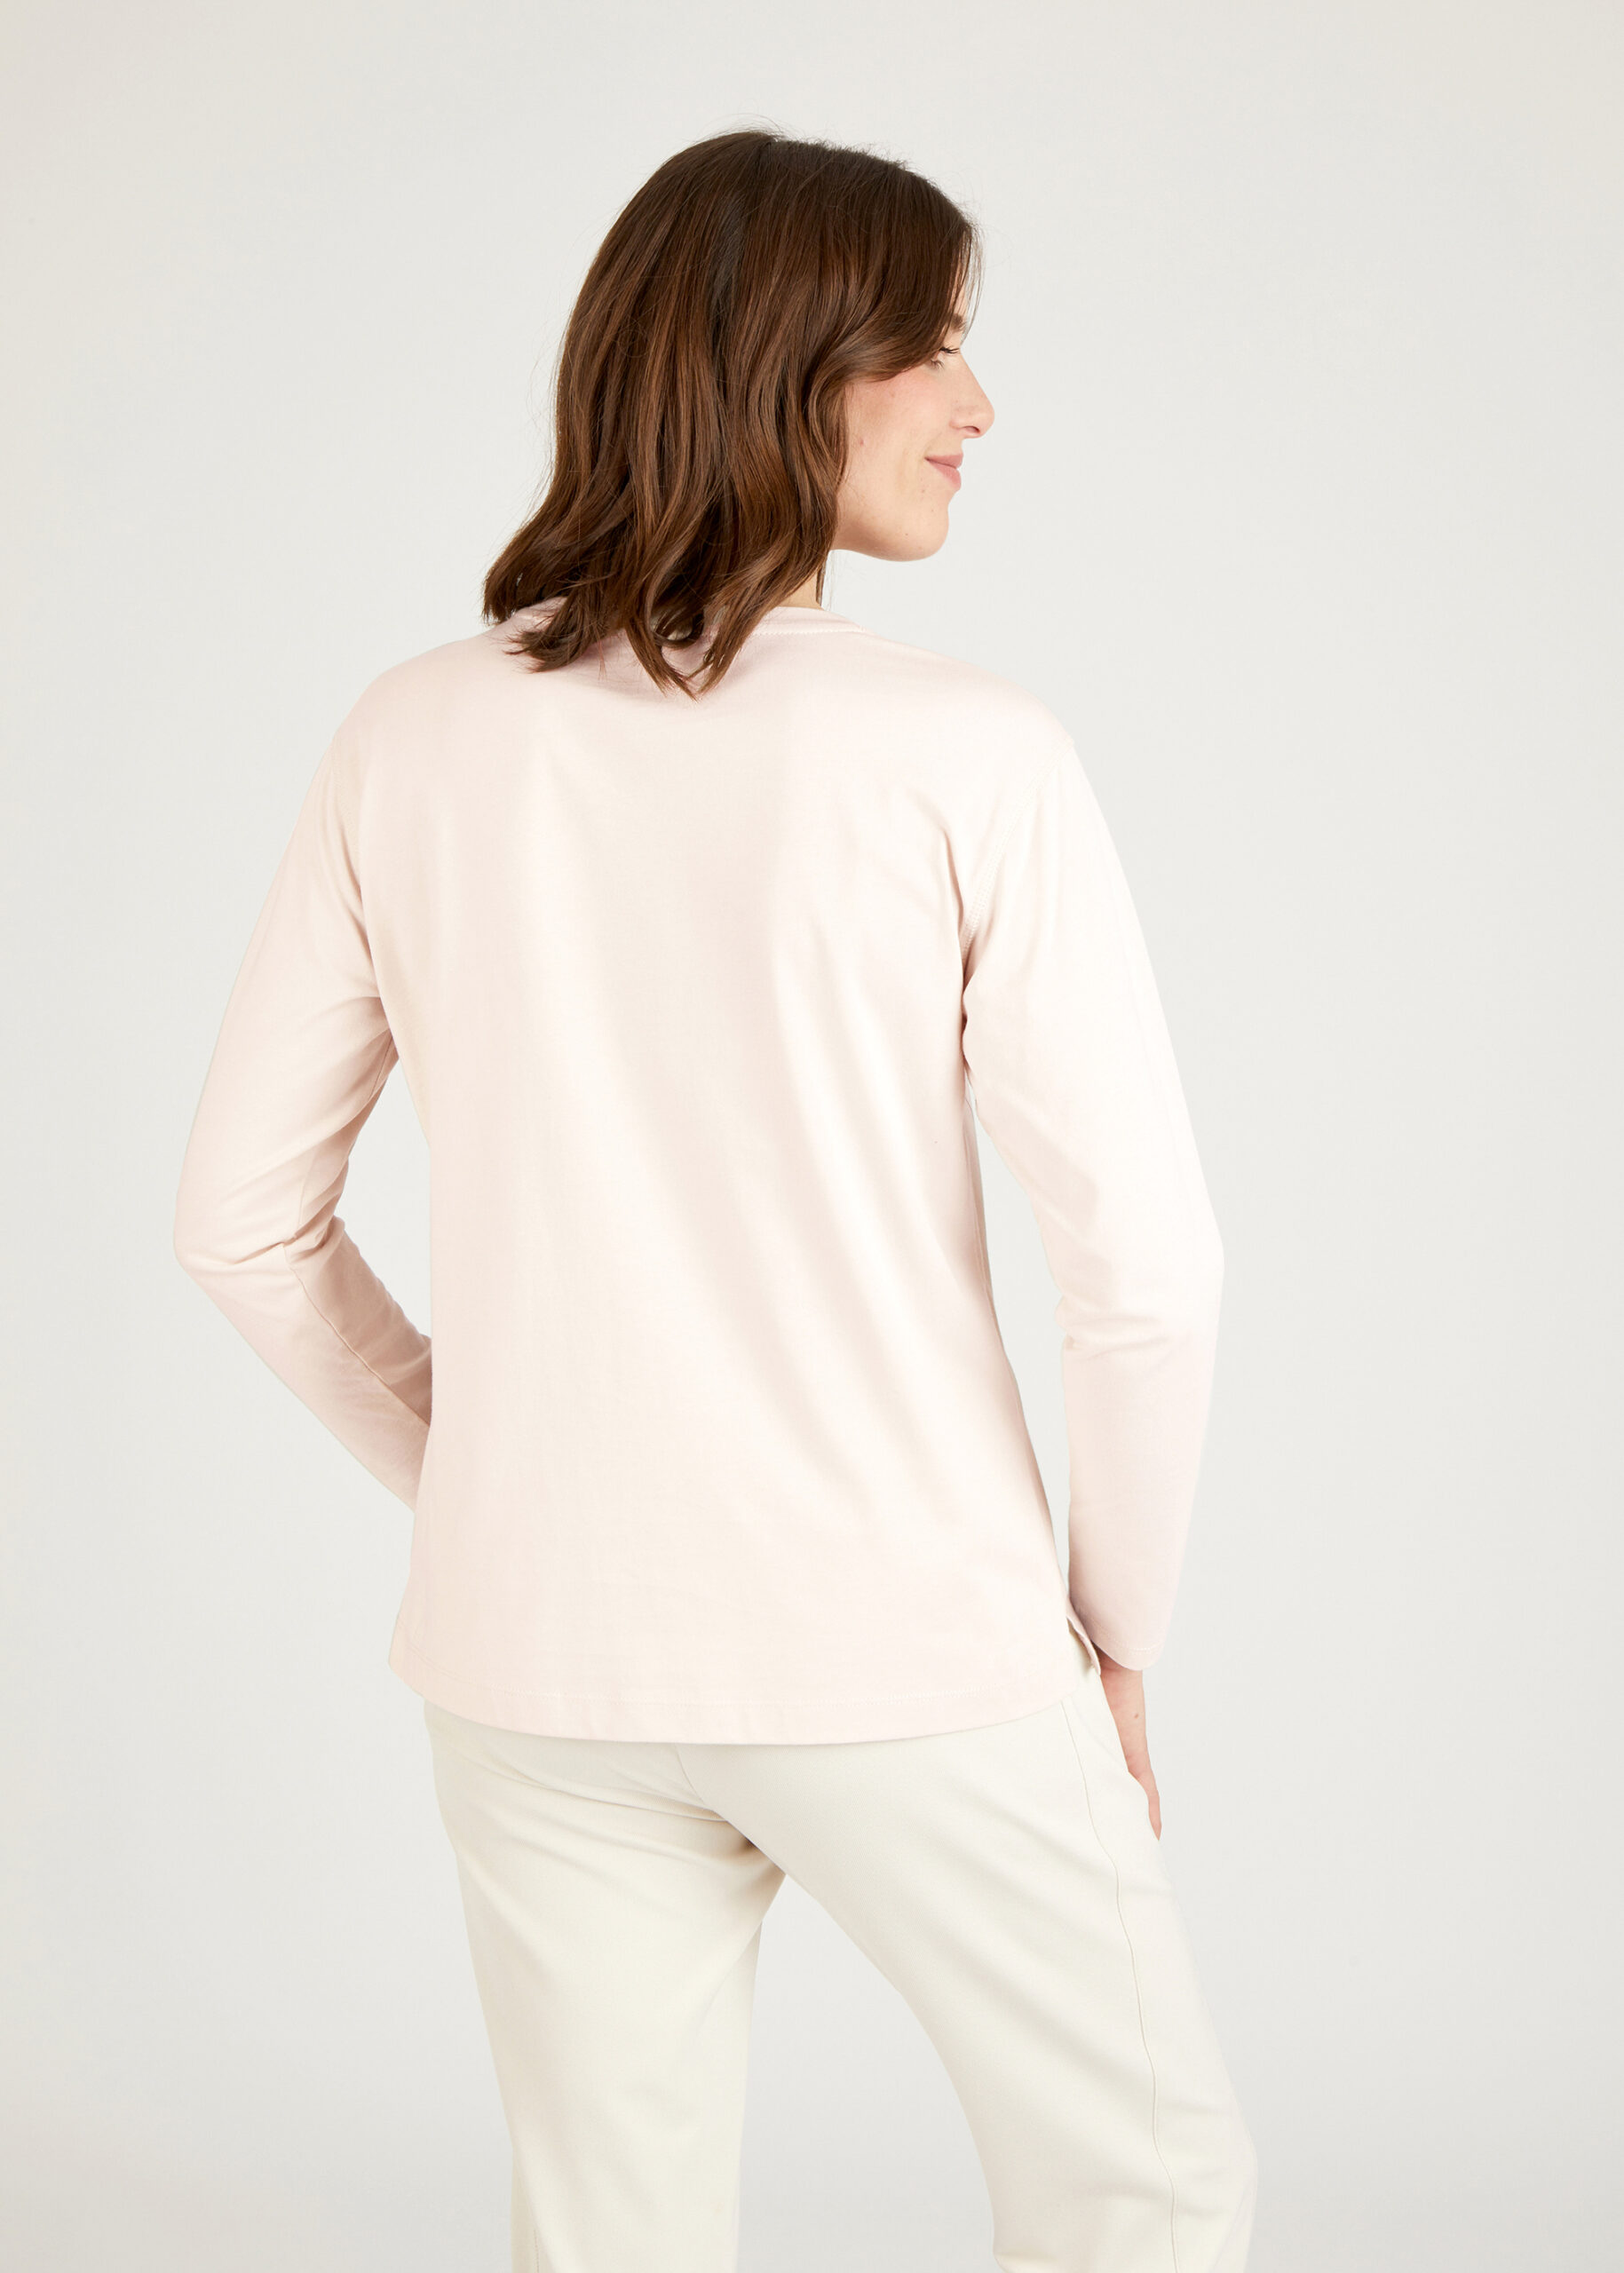 Onlineshop Wanner - Elfenbein Modehaus T-Shirt, LeComte